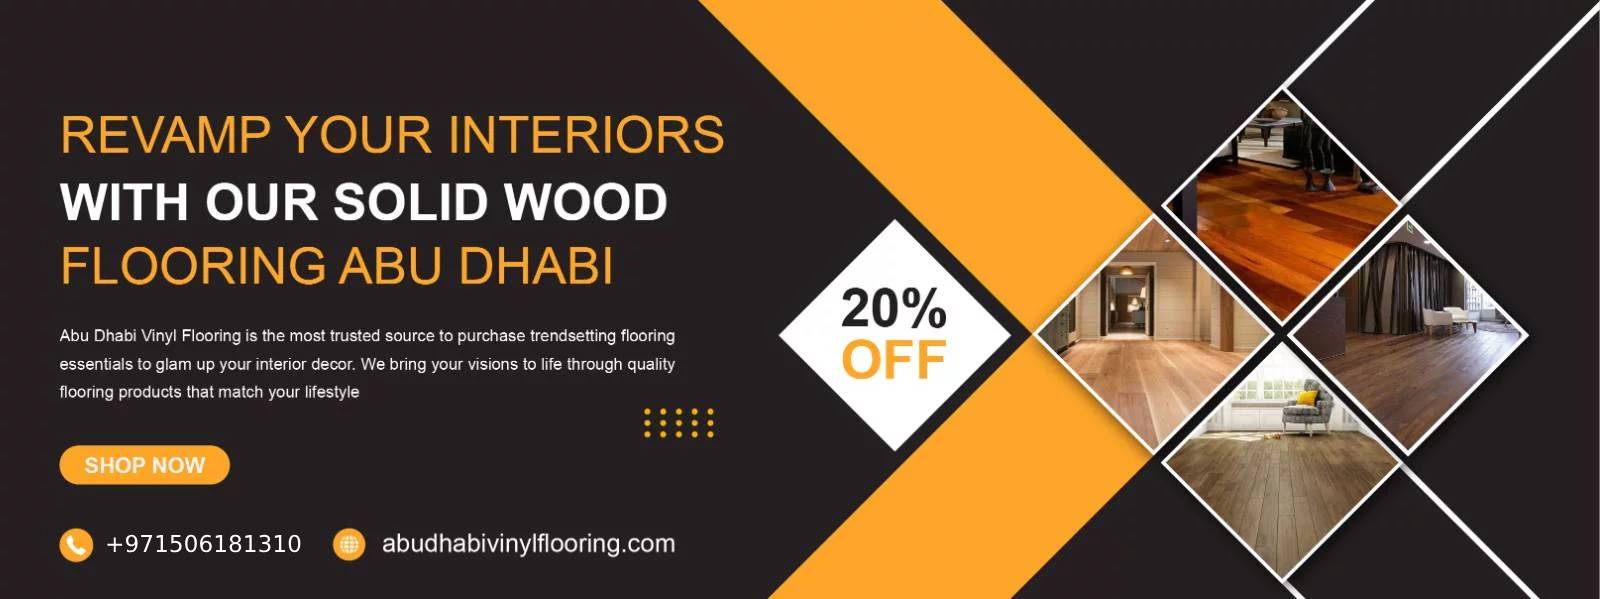 Solid Wood Flooring Abu Dhabi